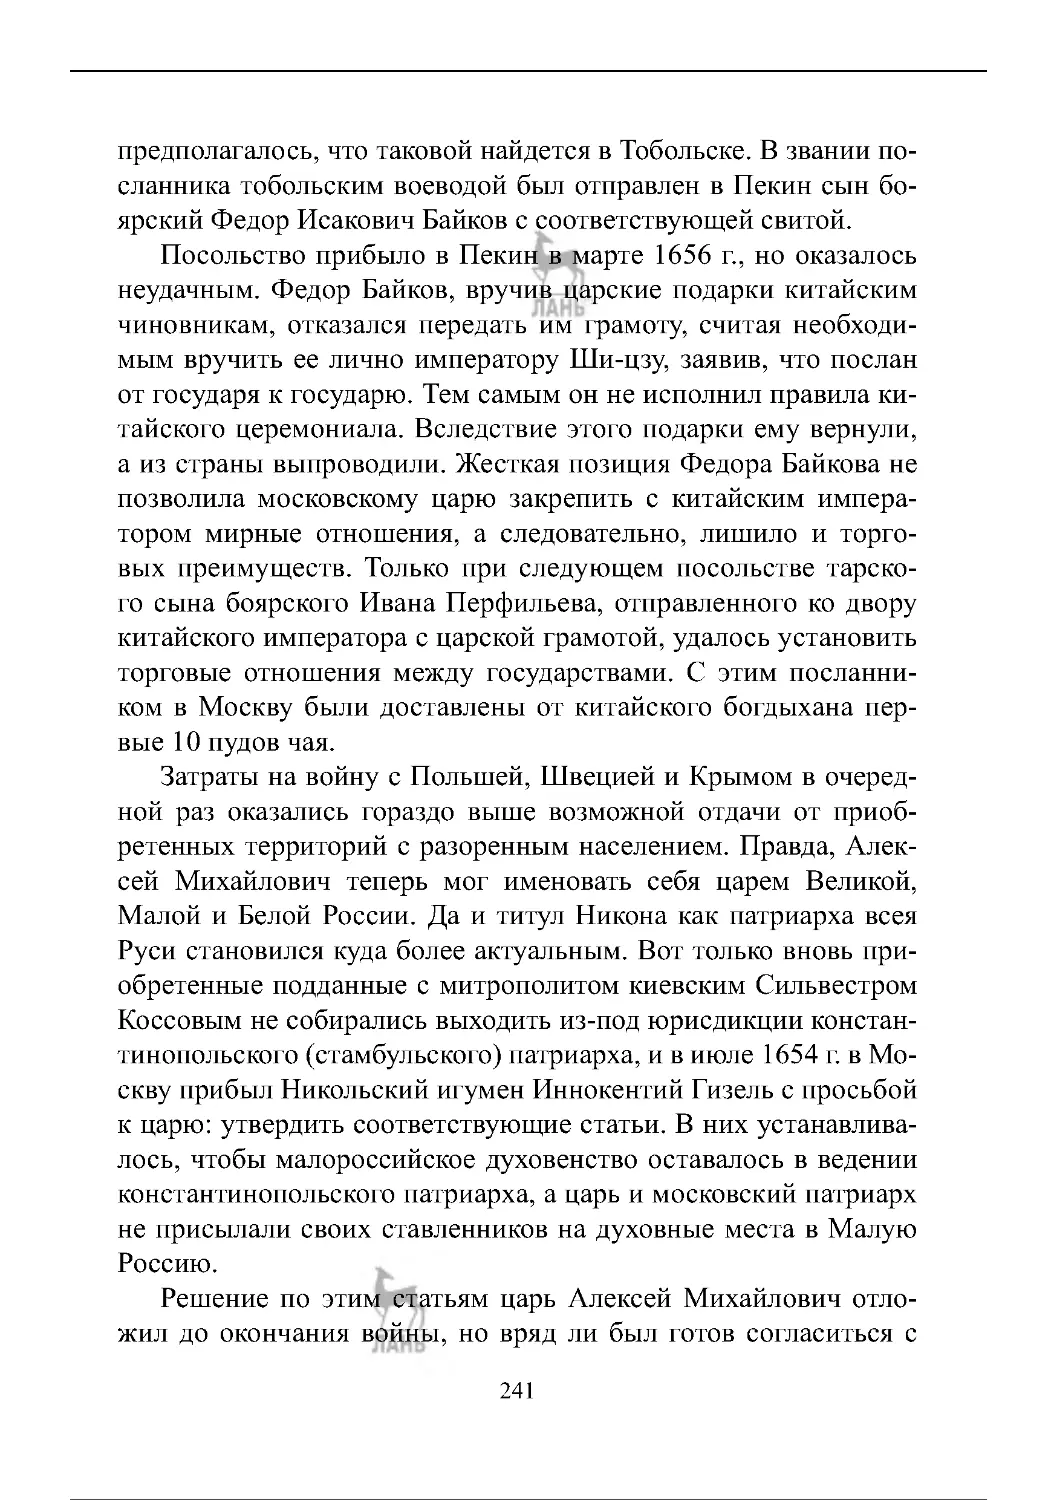 istoria_zavoevania_i_kolonizacii_sibiri_241-300